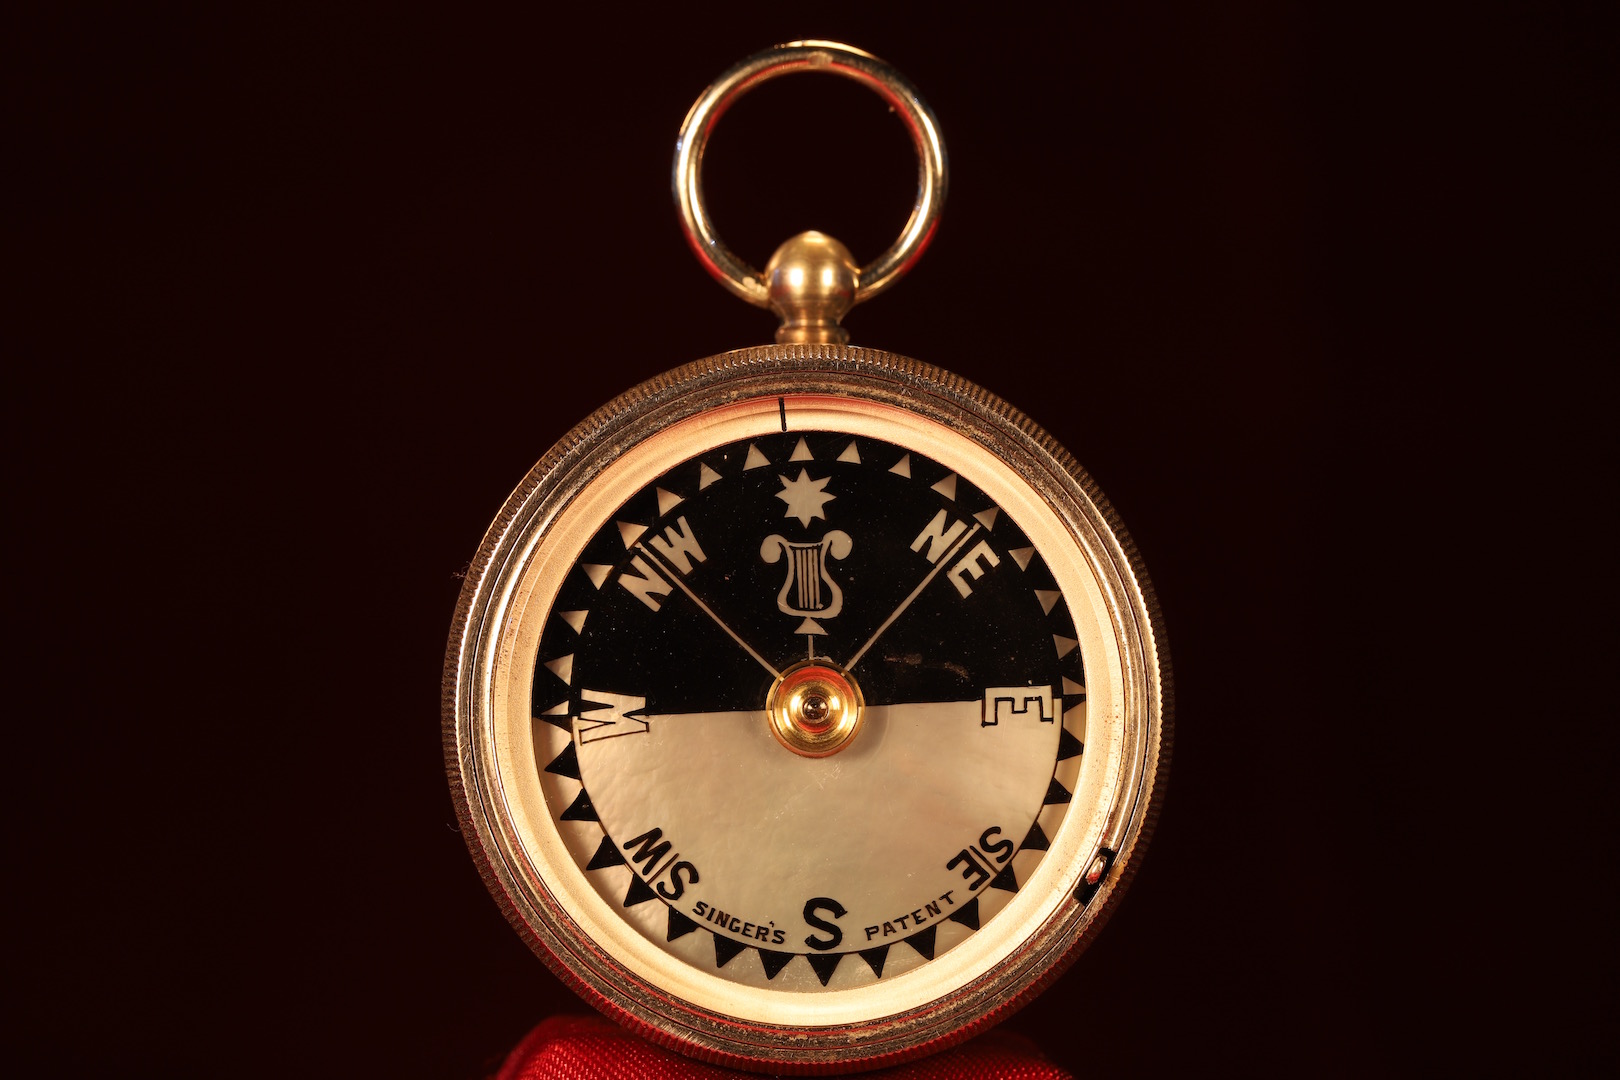 Image of Nickel Brass Pocket Barometer Altimeter Compass Compendium c1880